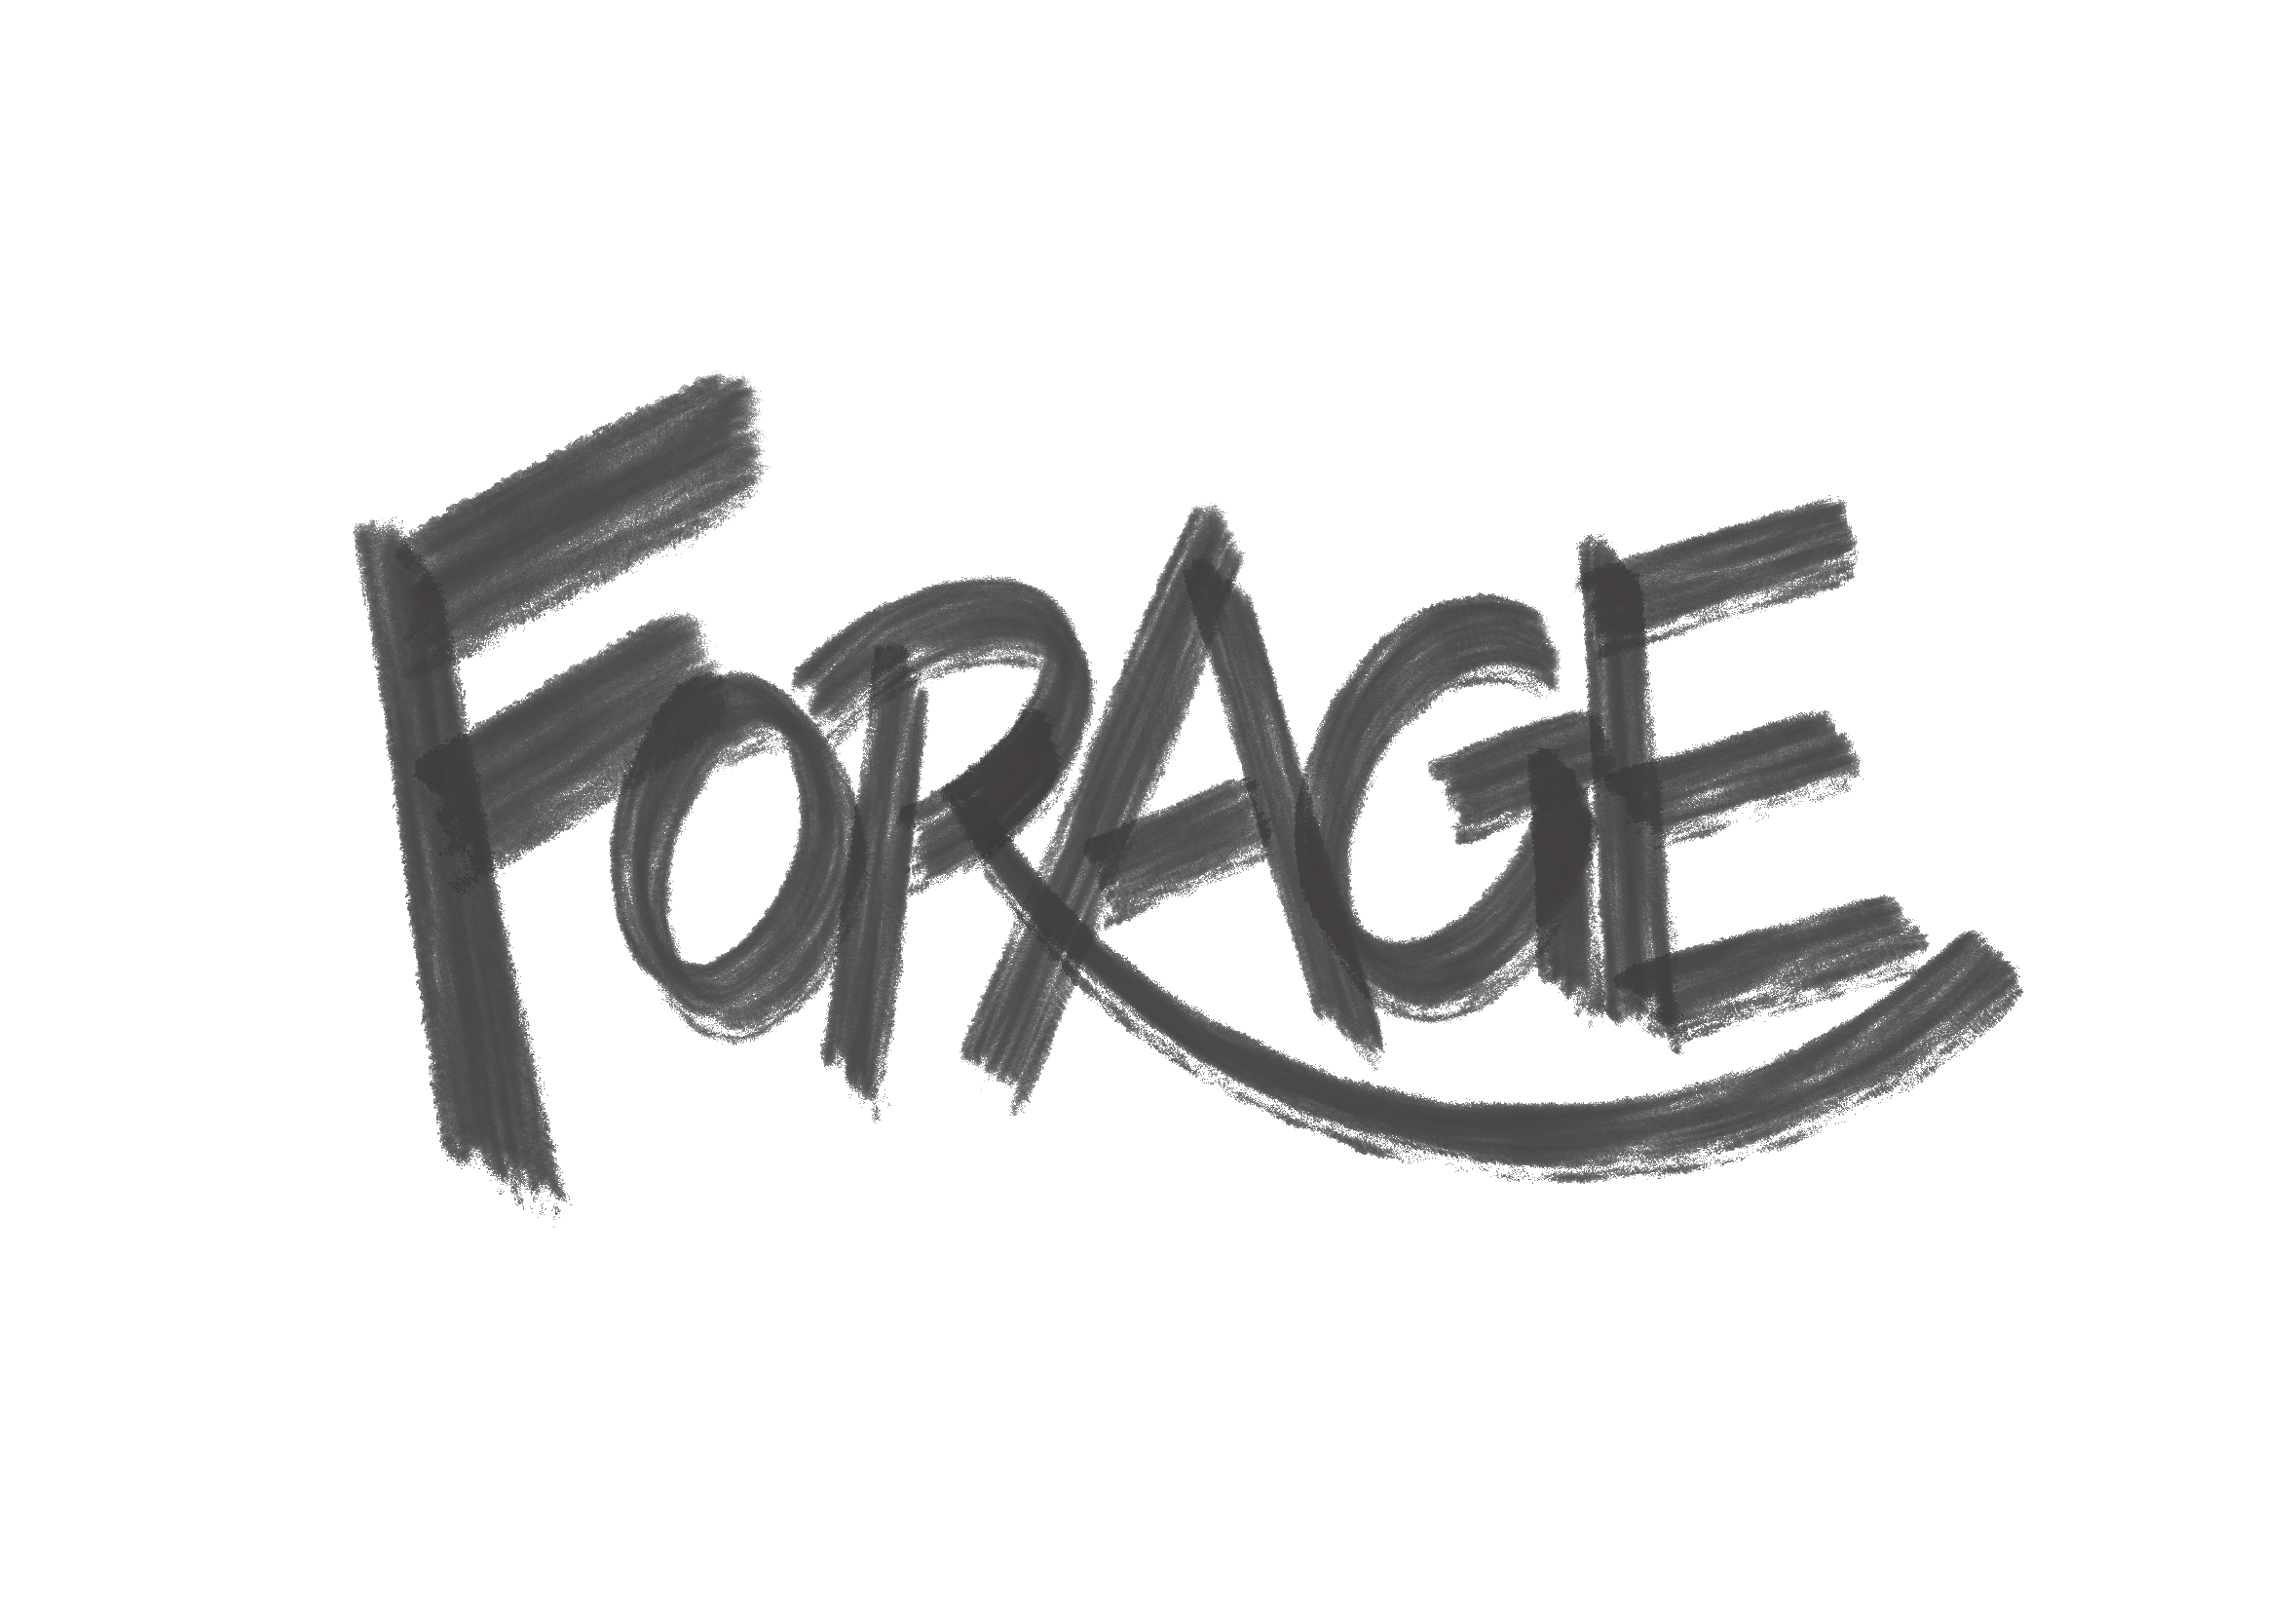 FORAGE